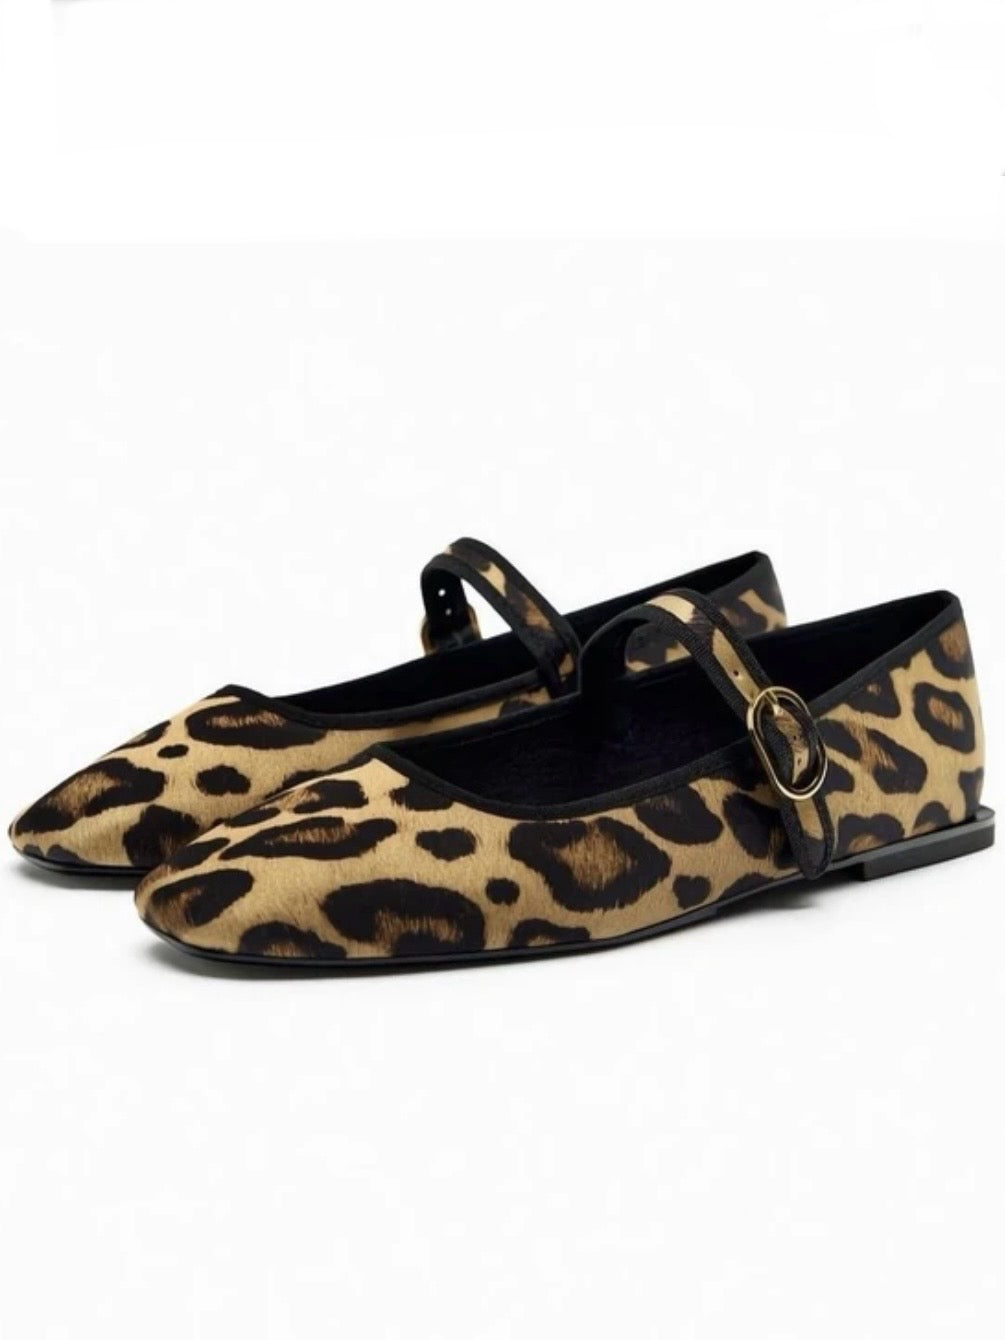 Leopard low square heel shoes